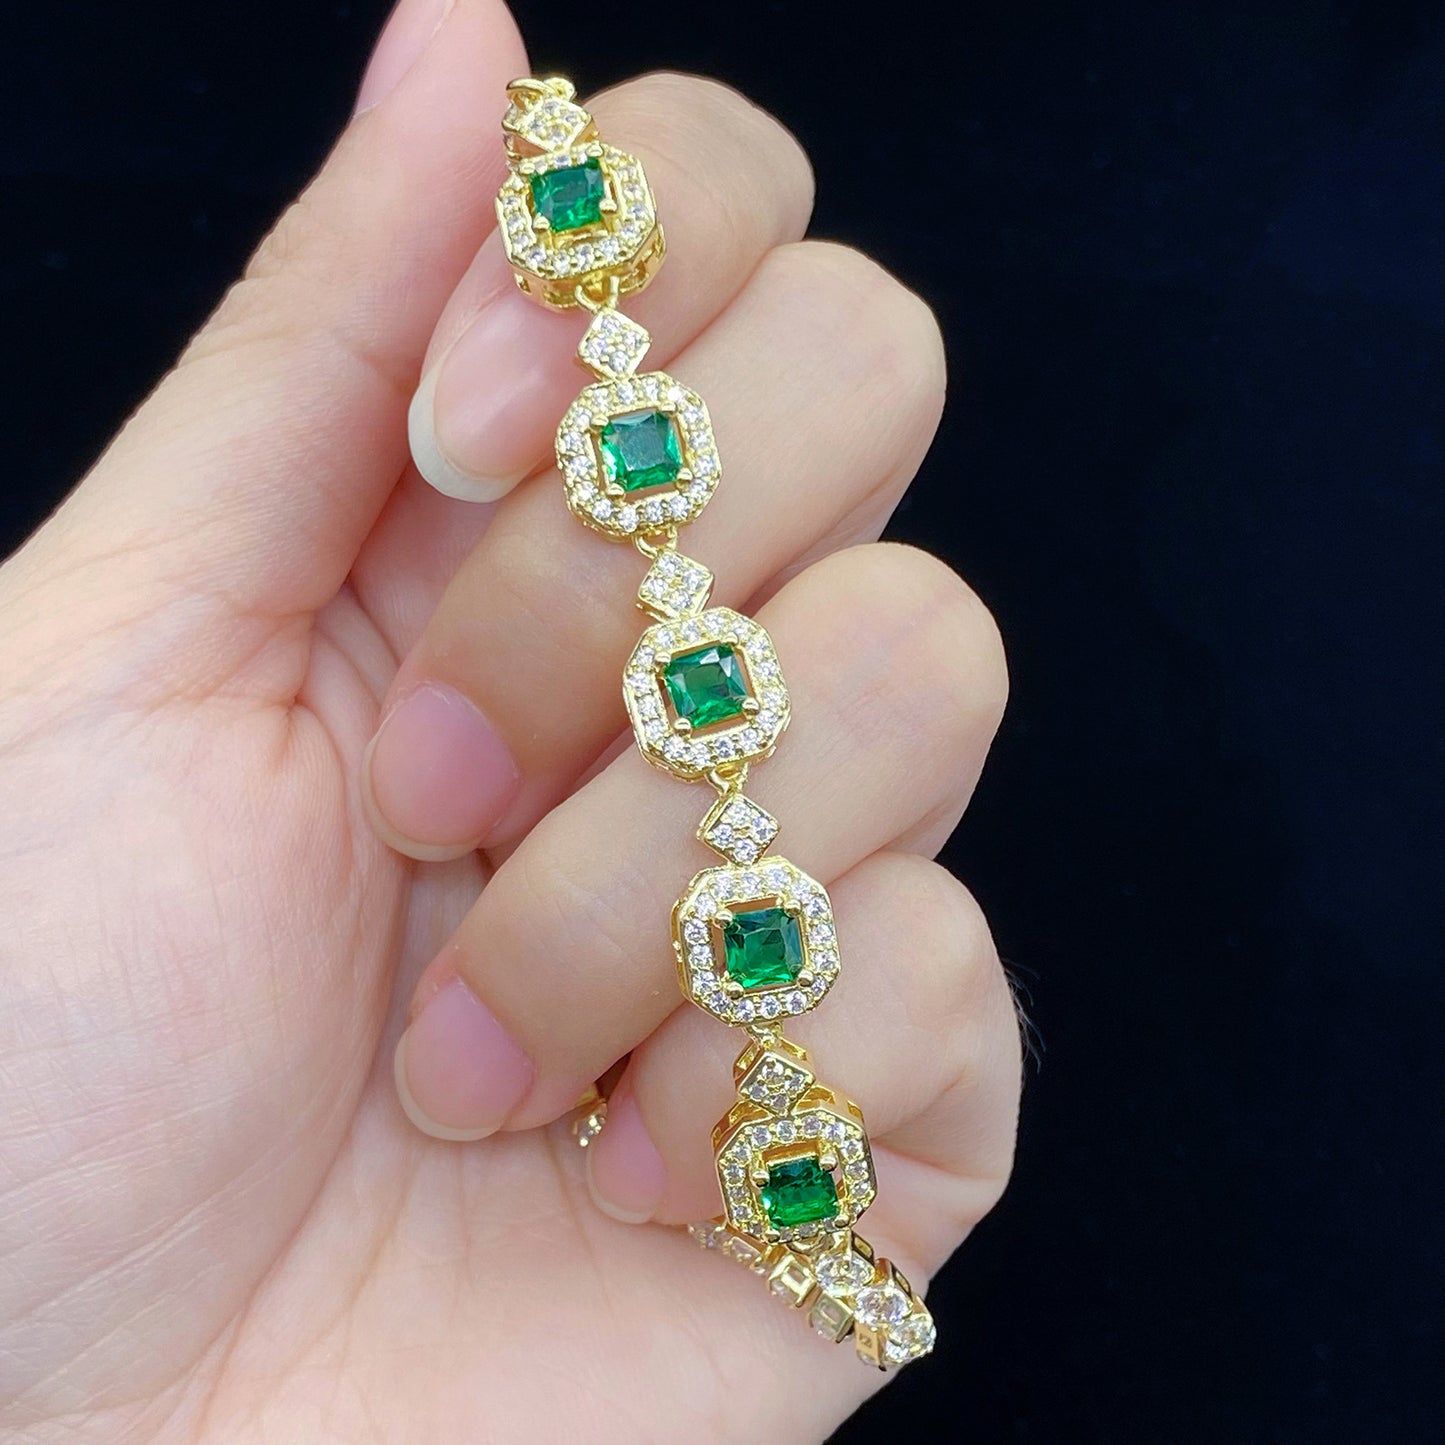 NO.8-Women's fashion jewelry, square colorful bracelet full of diamonds